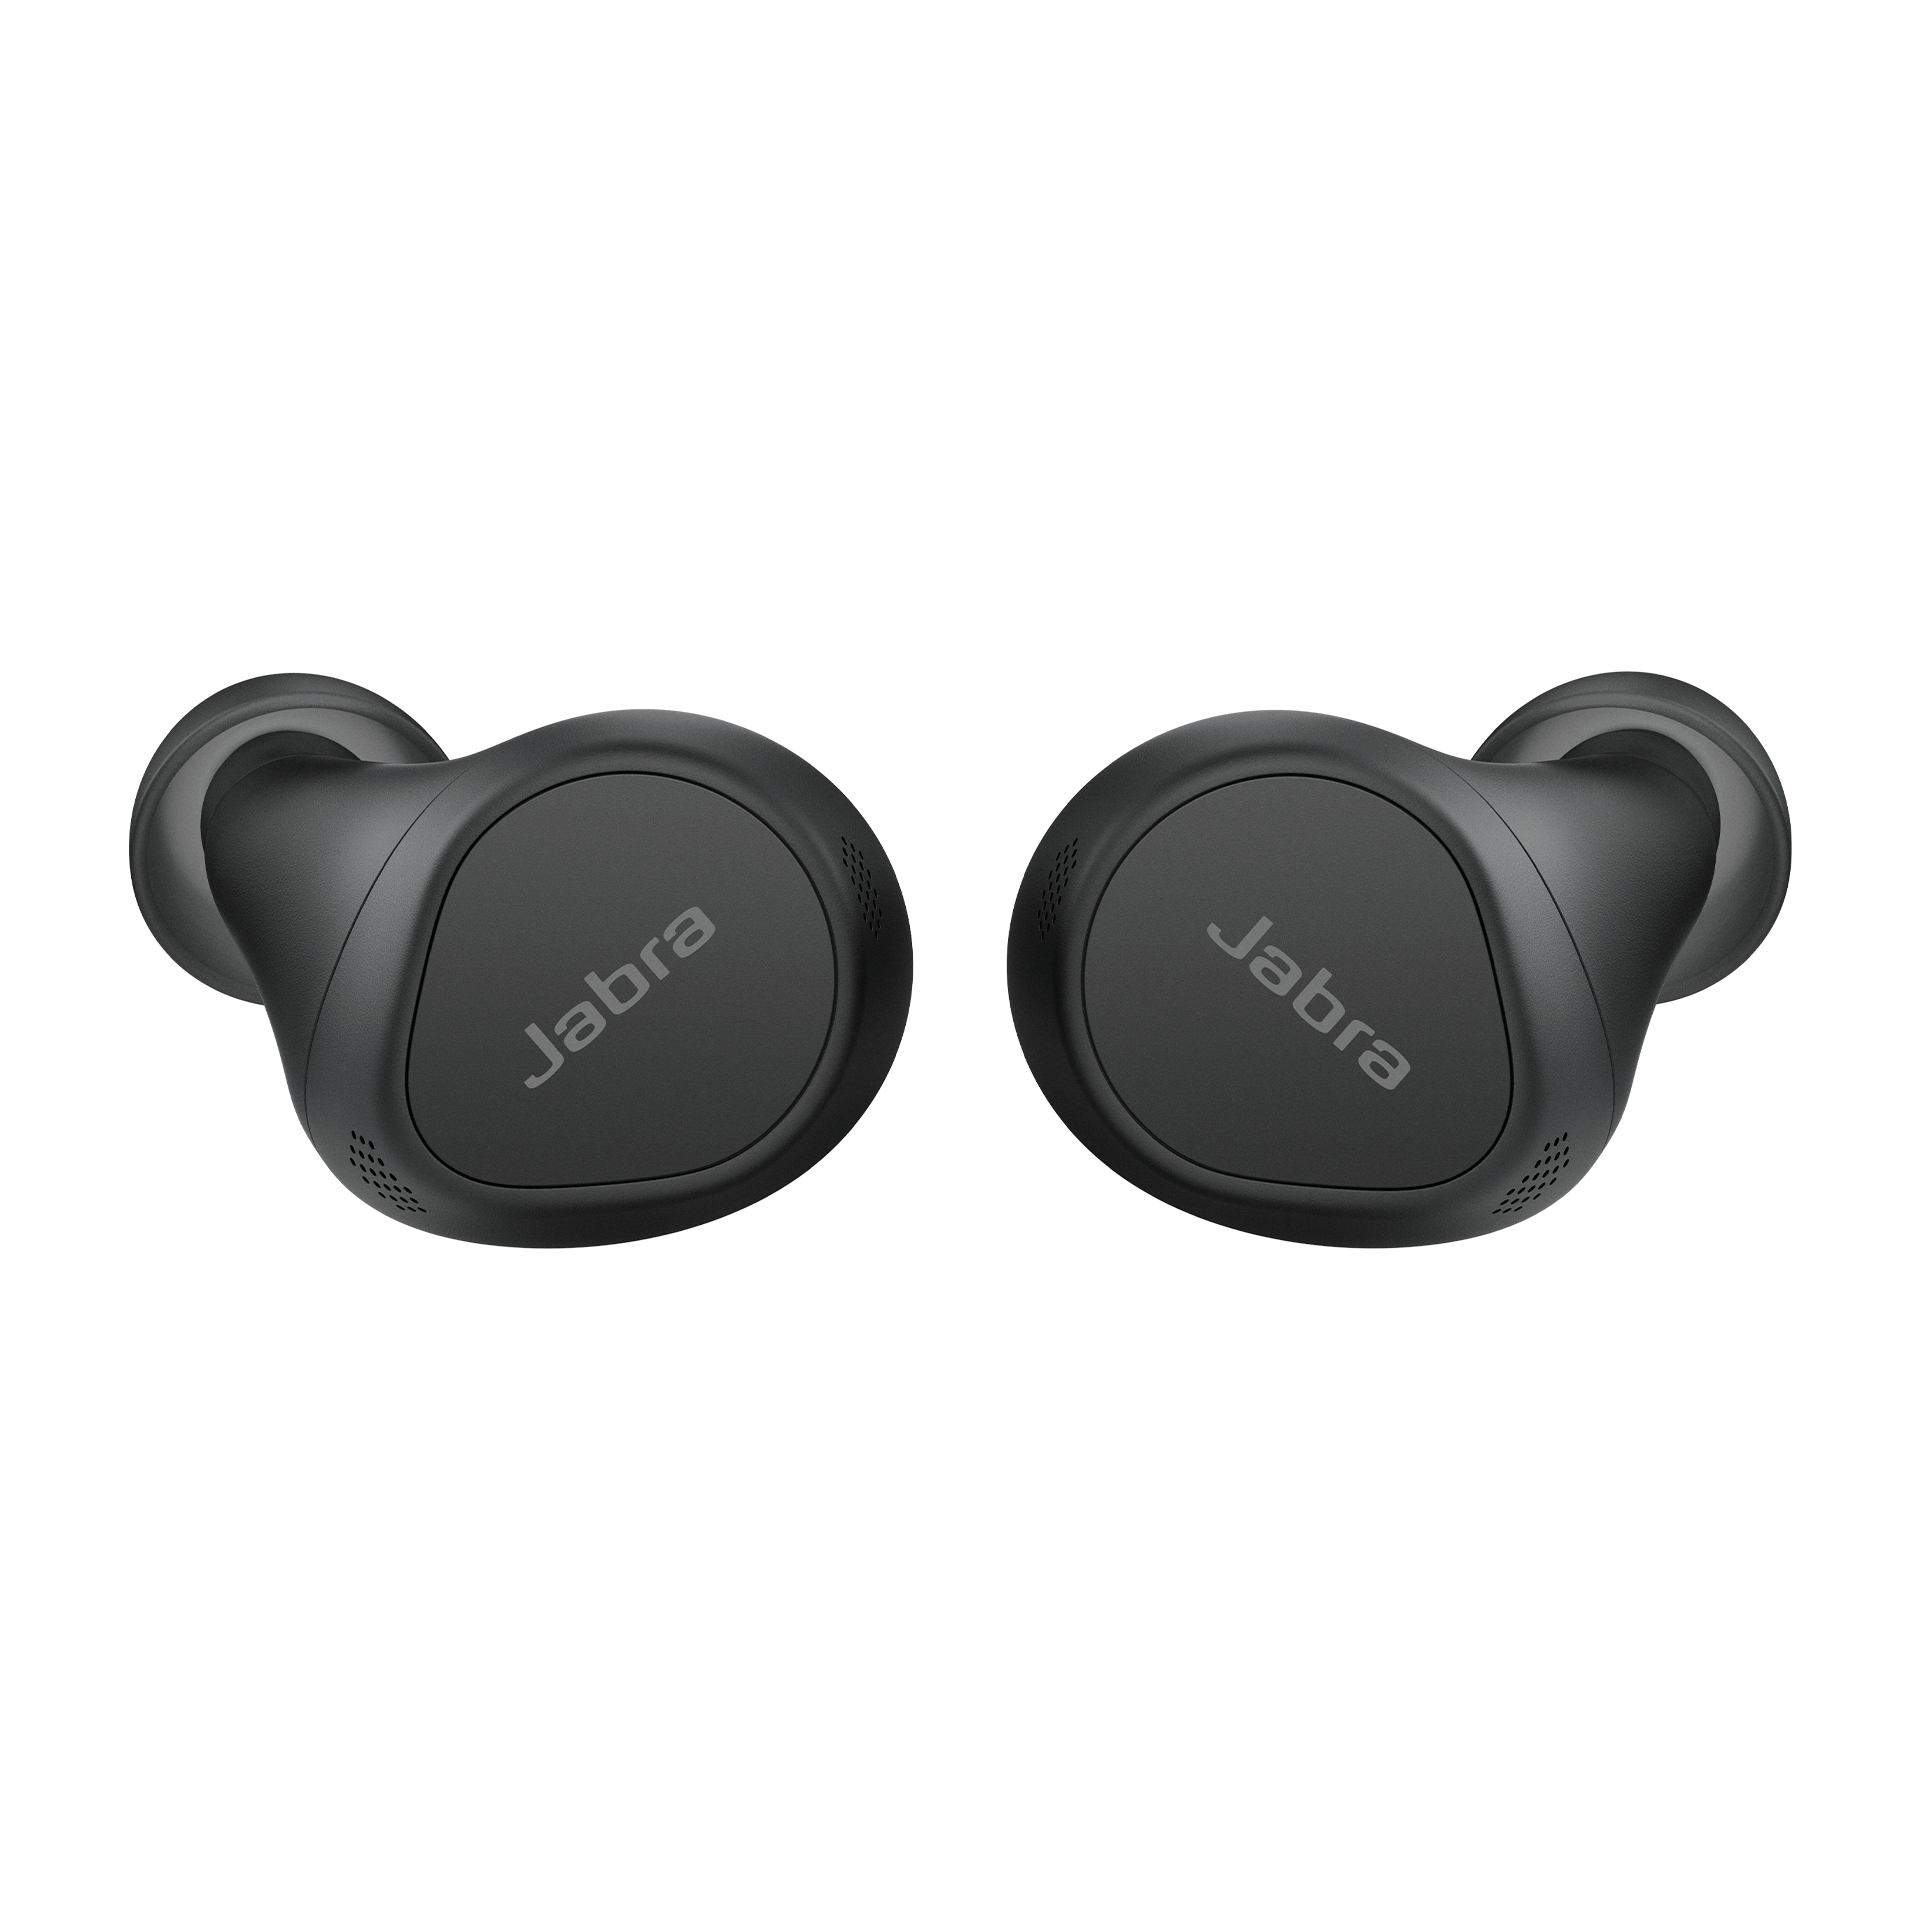 Jabra Elite 7 Pro Replacement Earbuds - Black